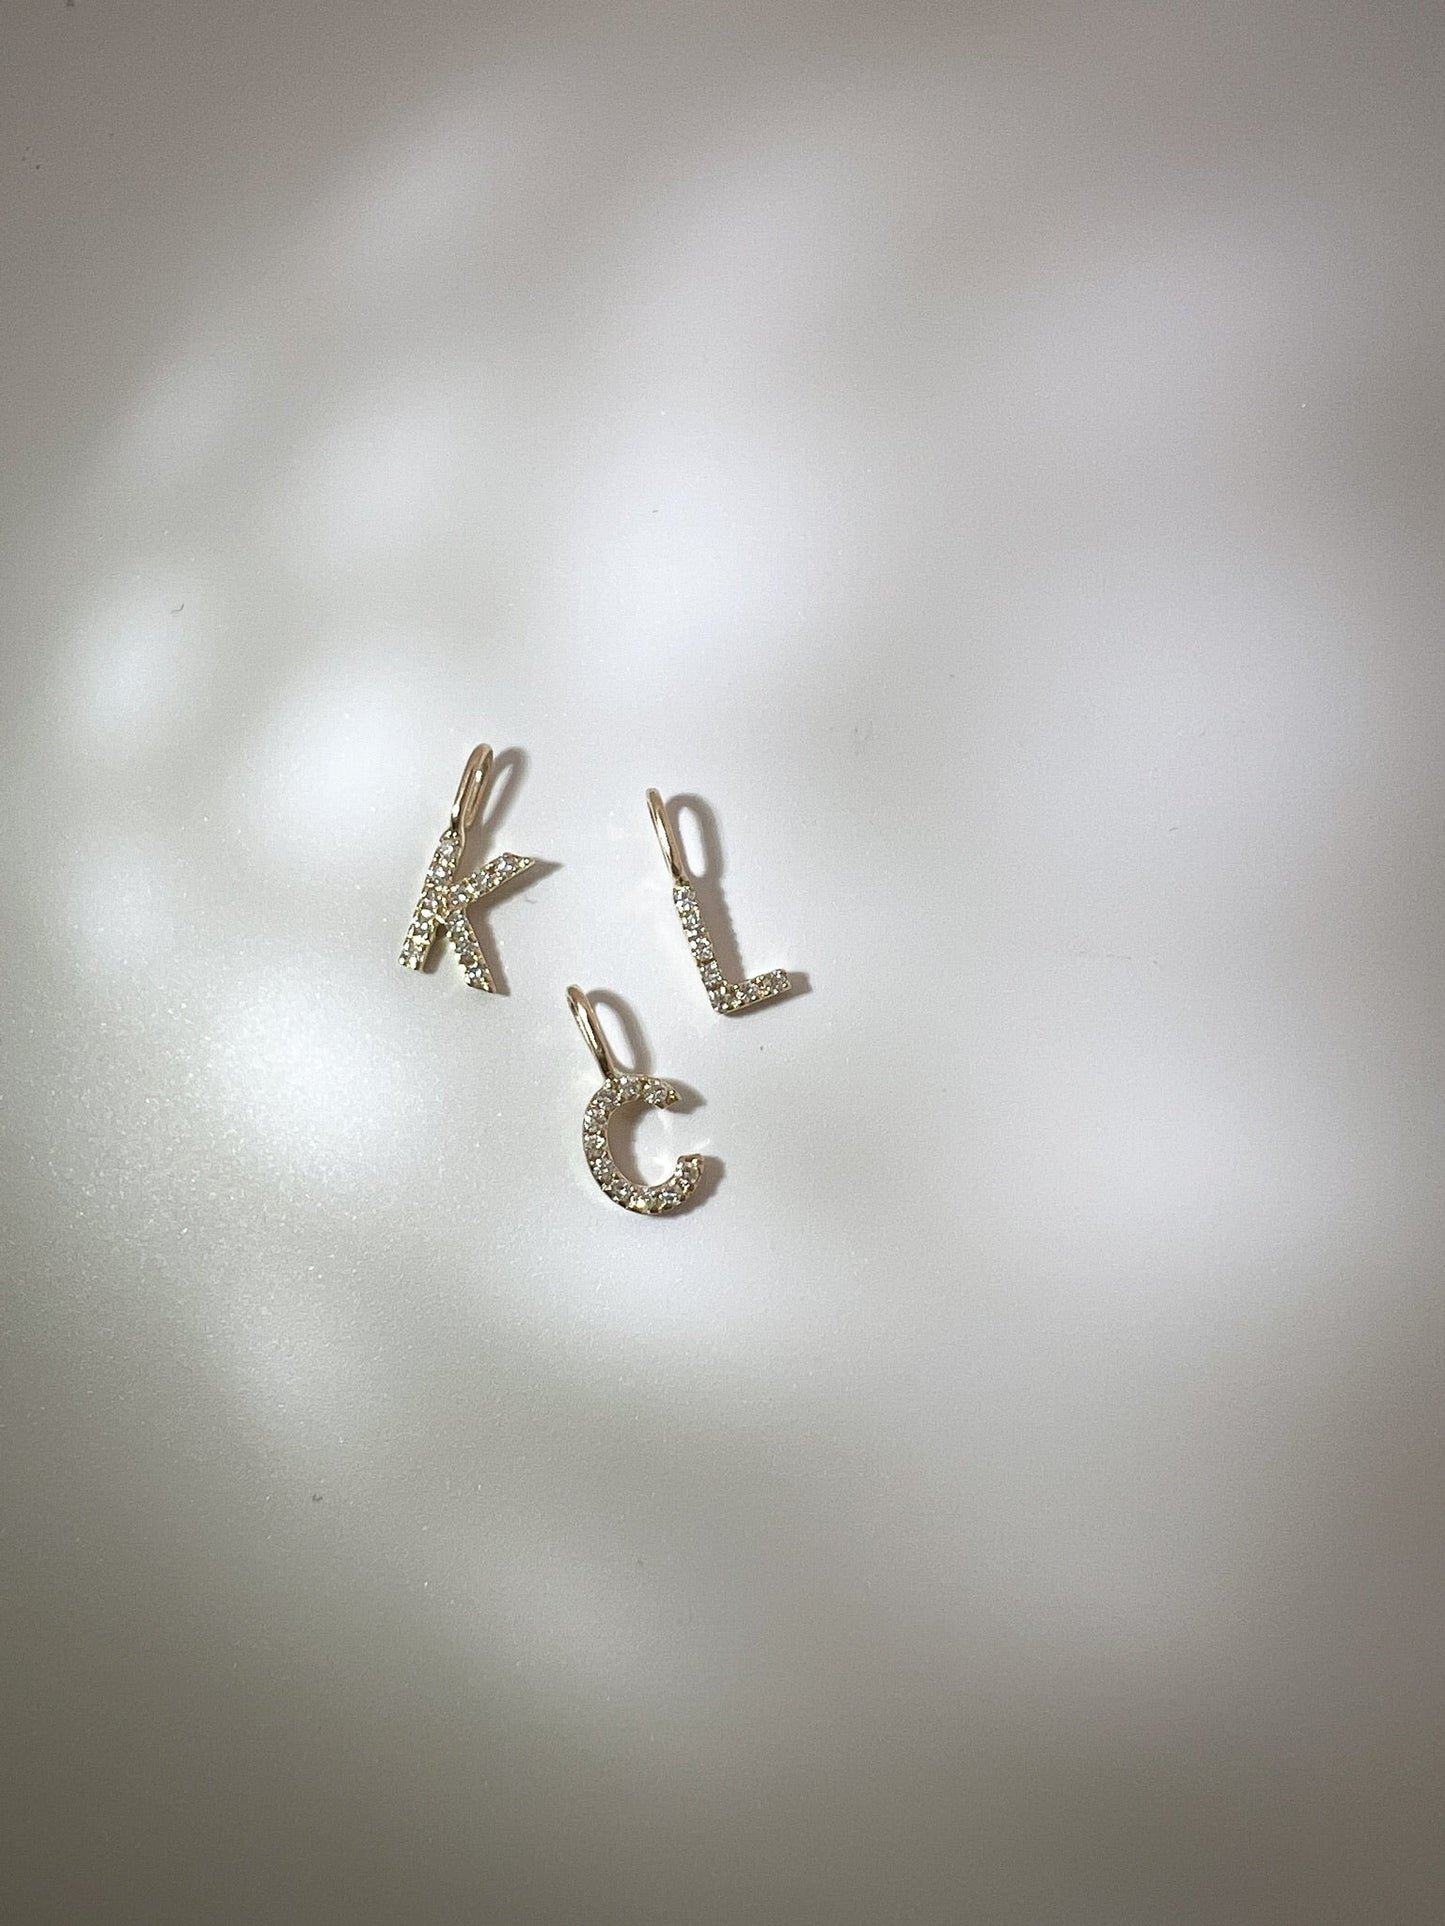 Letter Diamond Pendant (0.04 ct.) 14K Gold